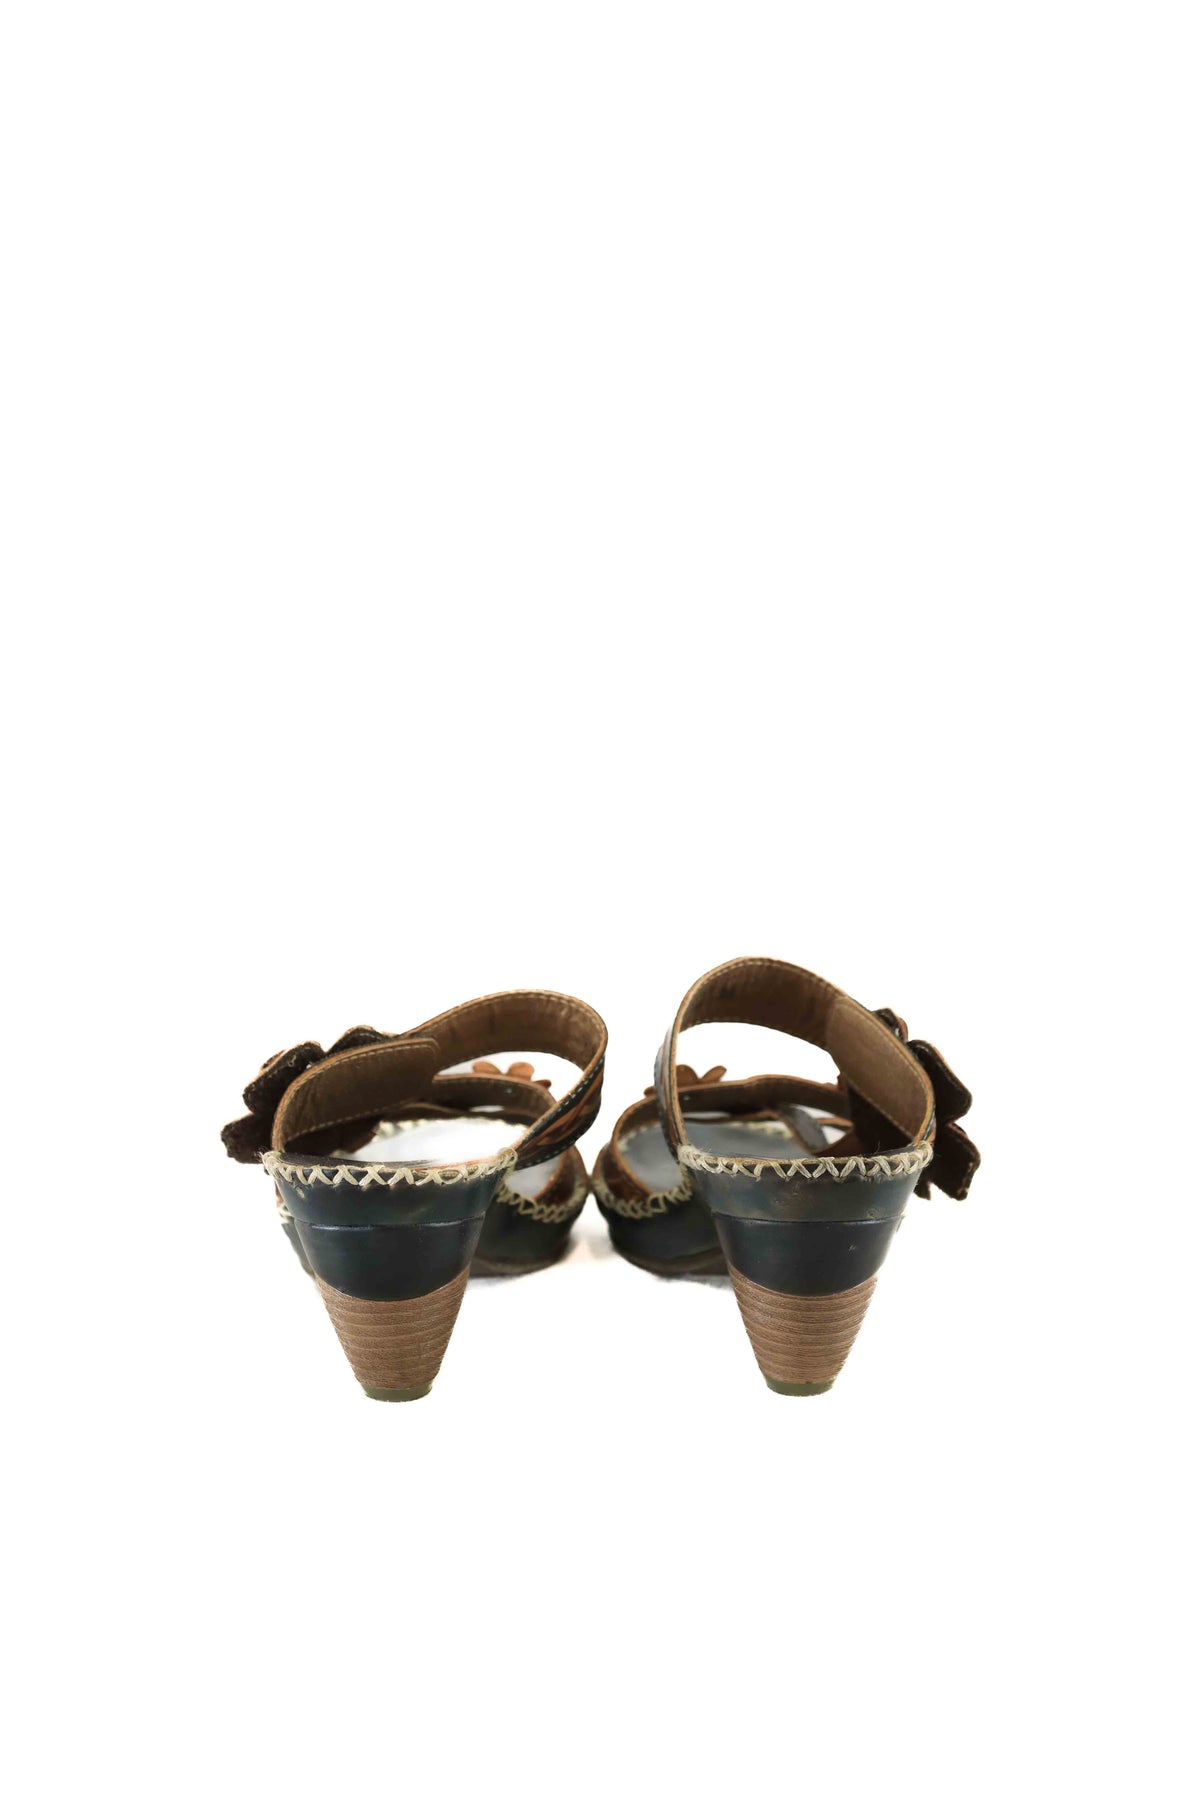 Laura Vita Black Floral Sandals 38